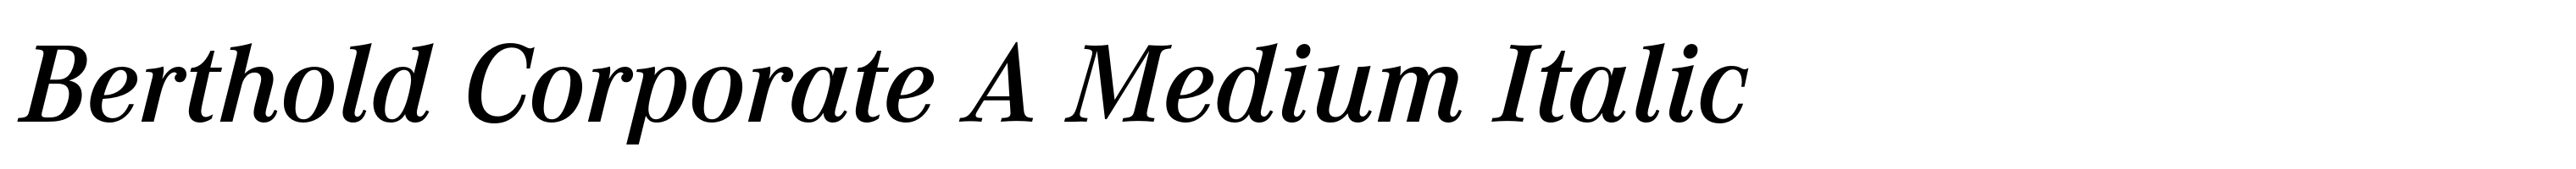 Berthold Corporate A Medium Italic